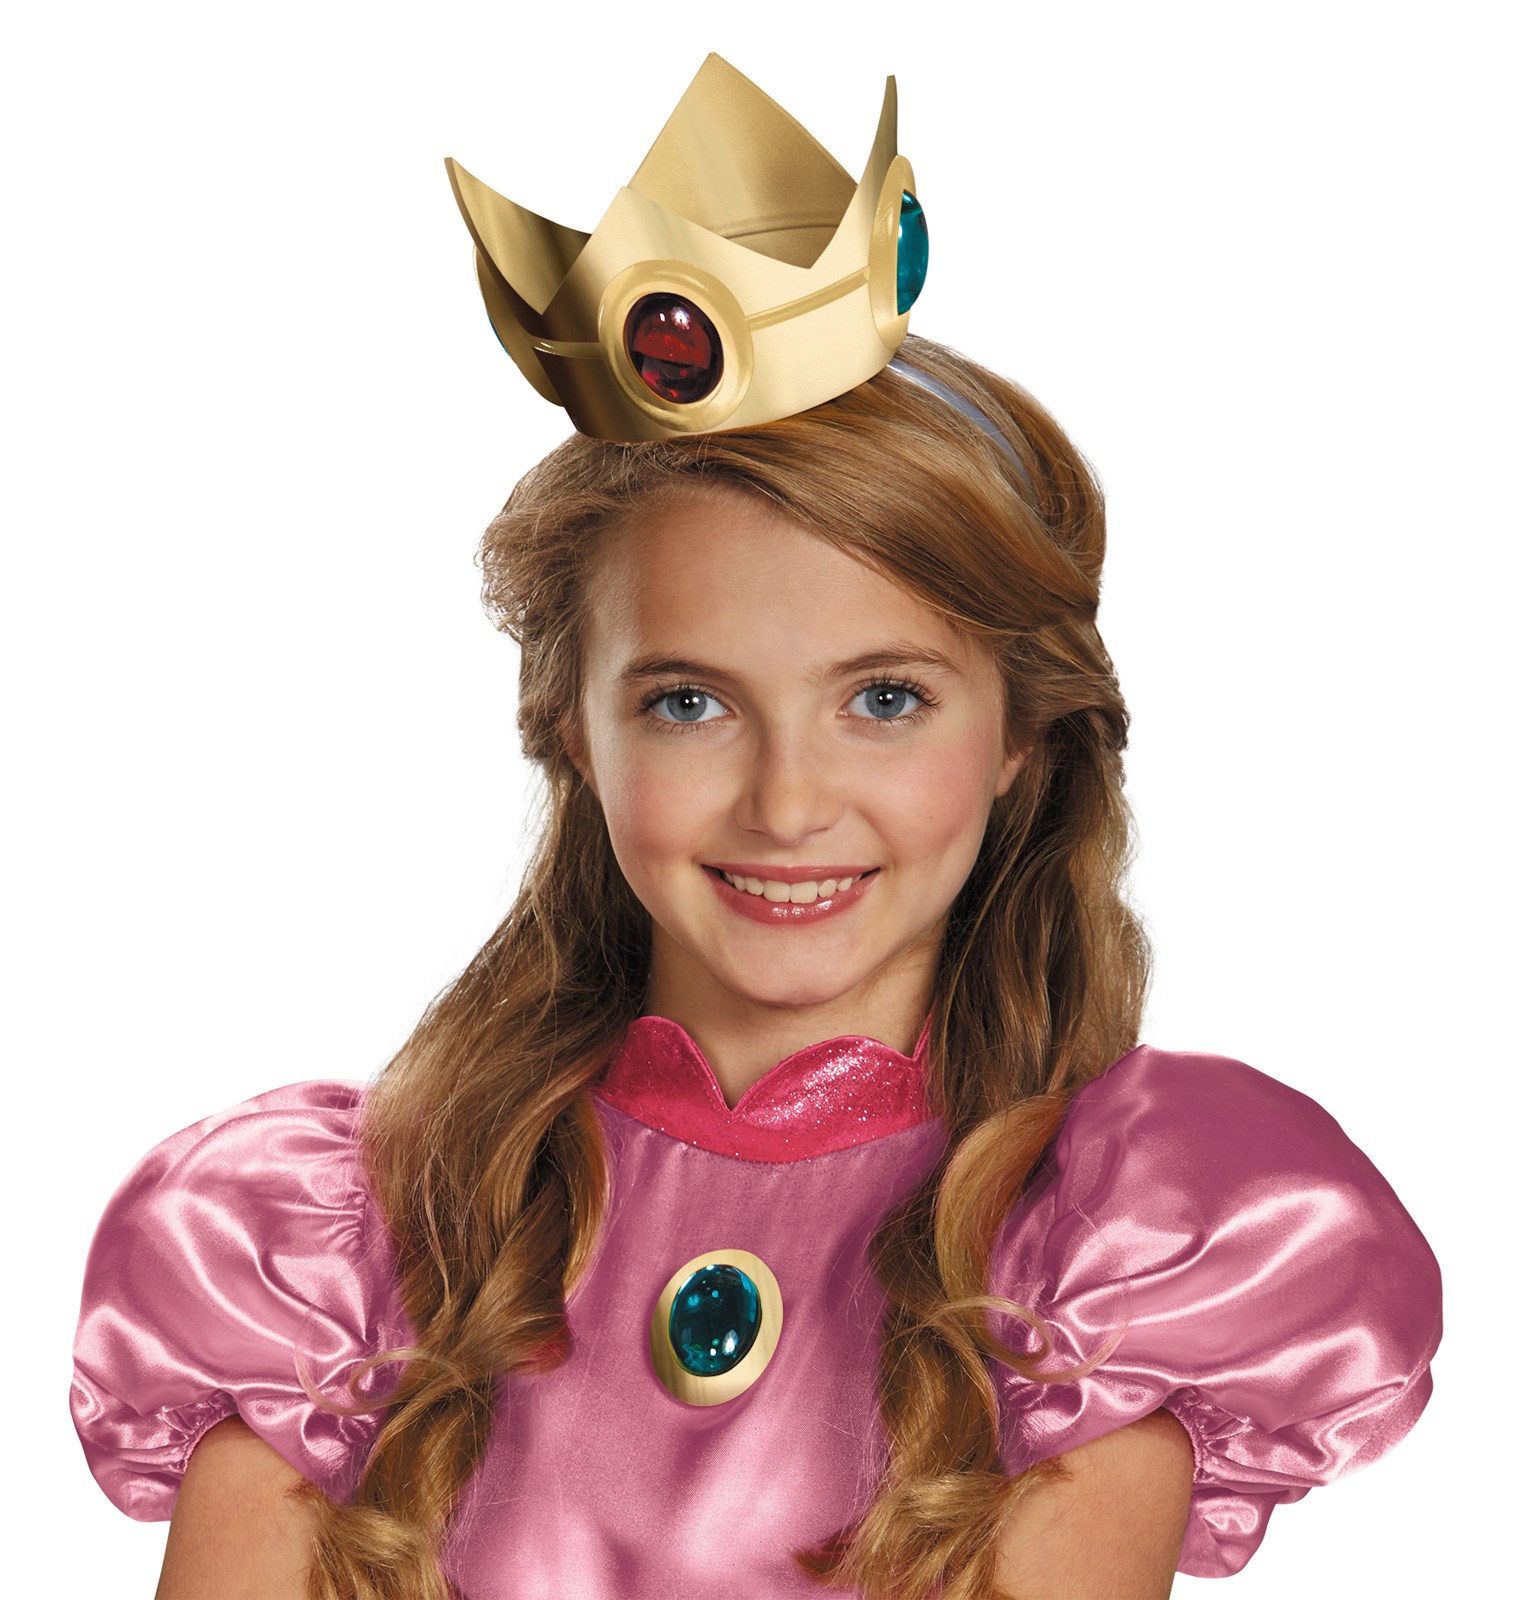 Super Mario Brothers Princess Peach Crown & Amulet